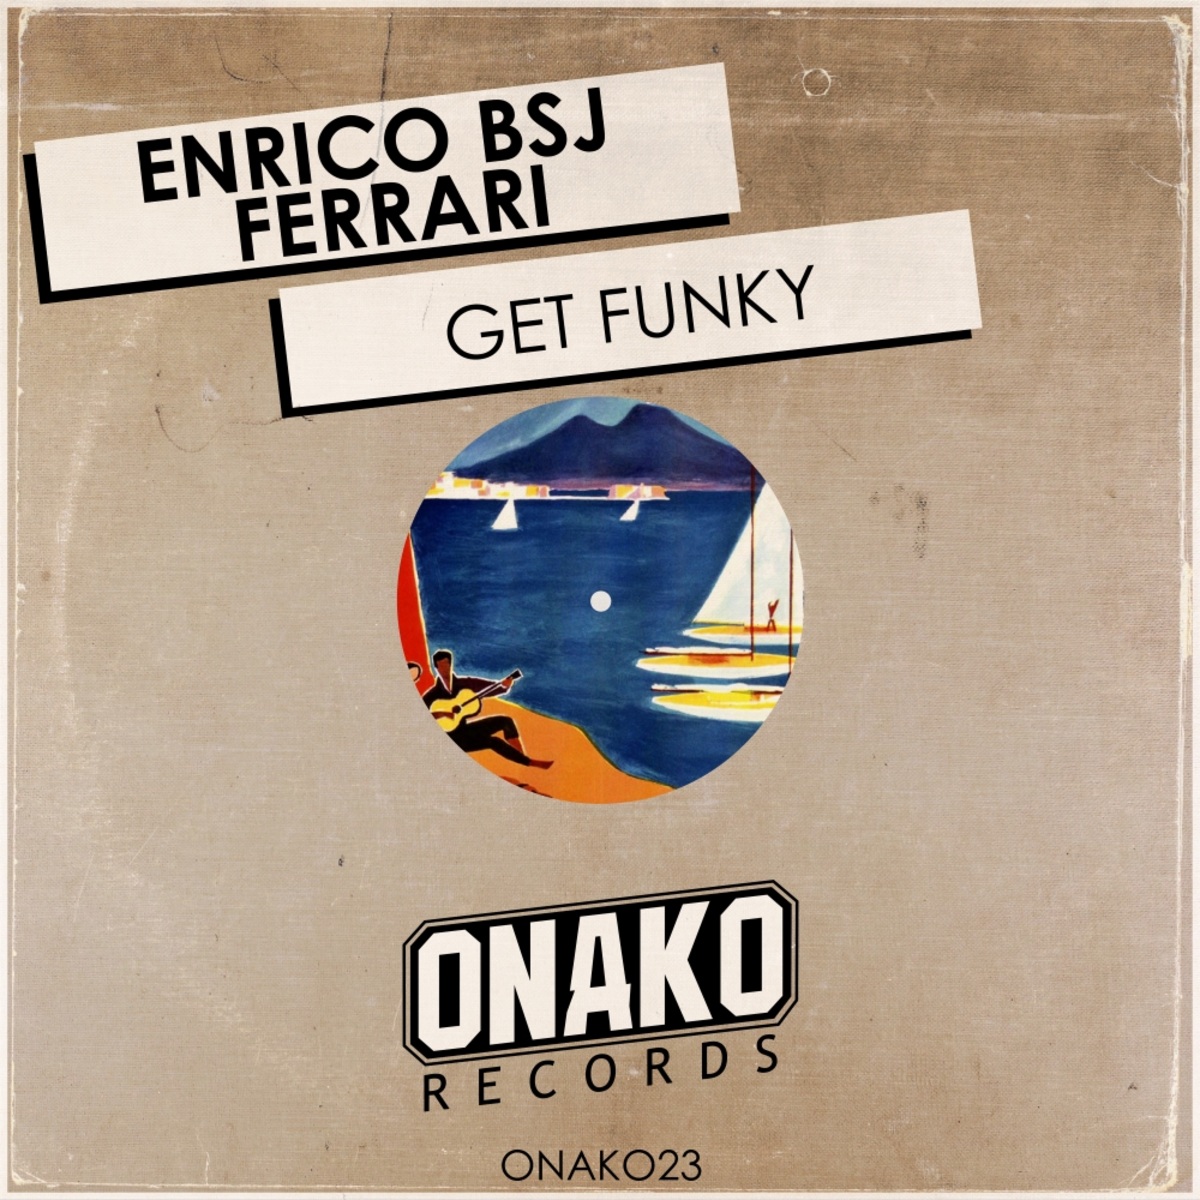 Enrico BSJ Ferrari - Get Funky / Onako Records